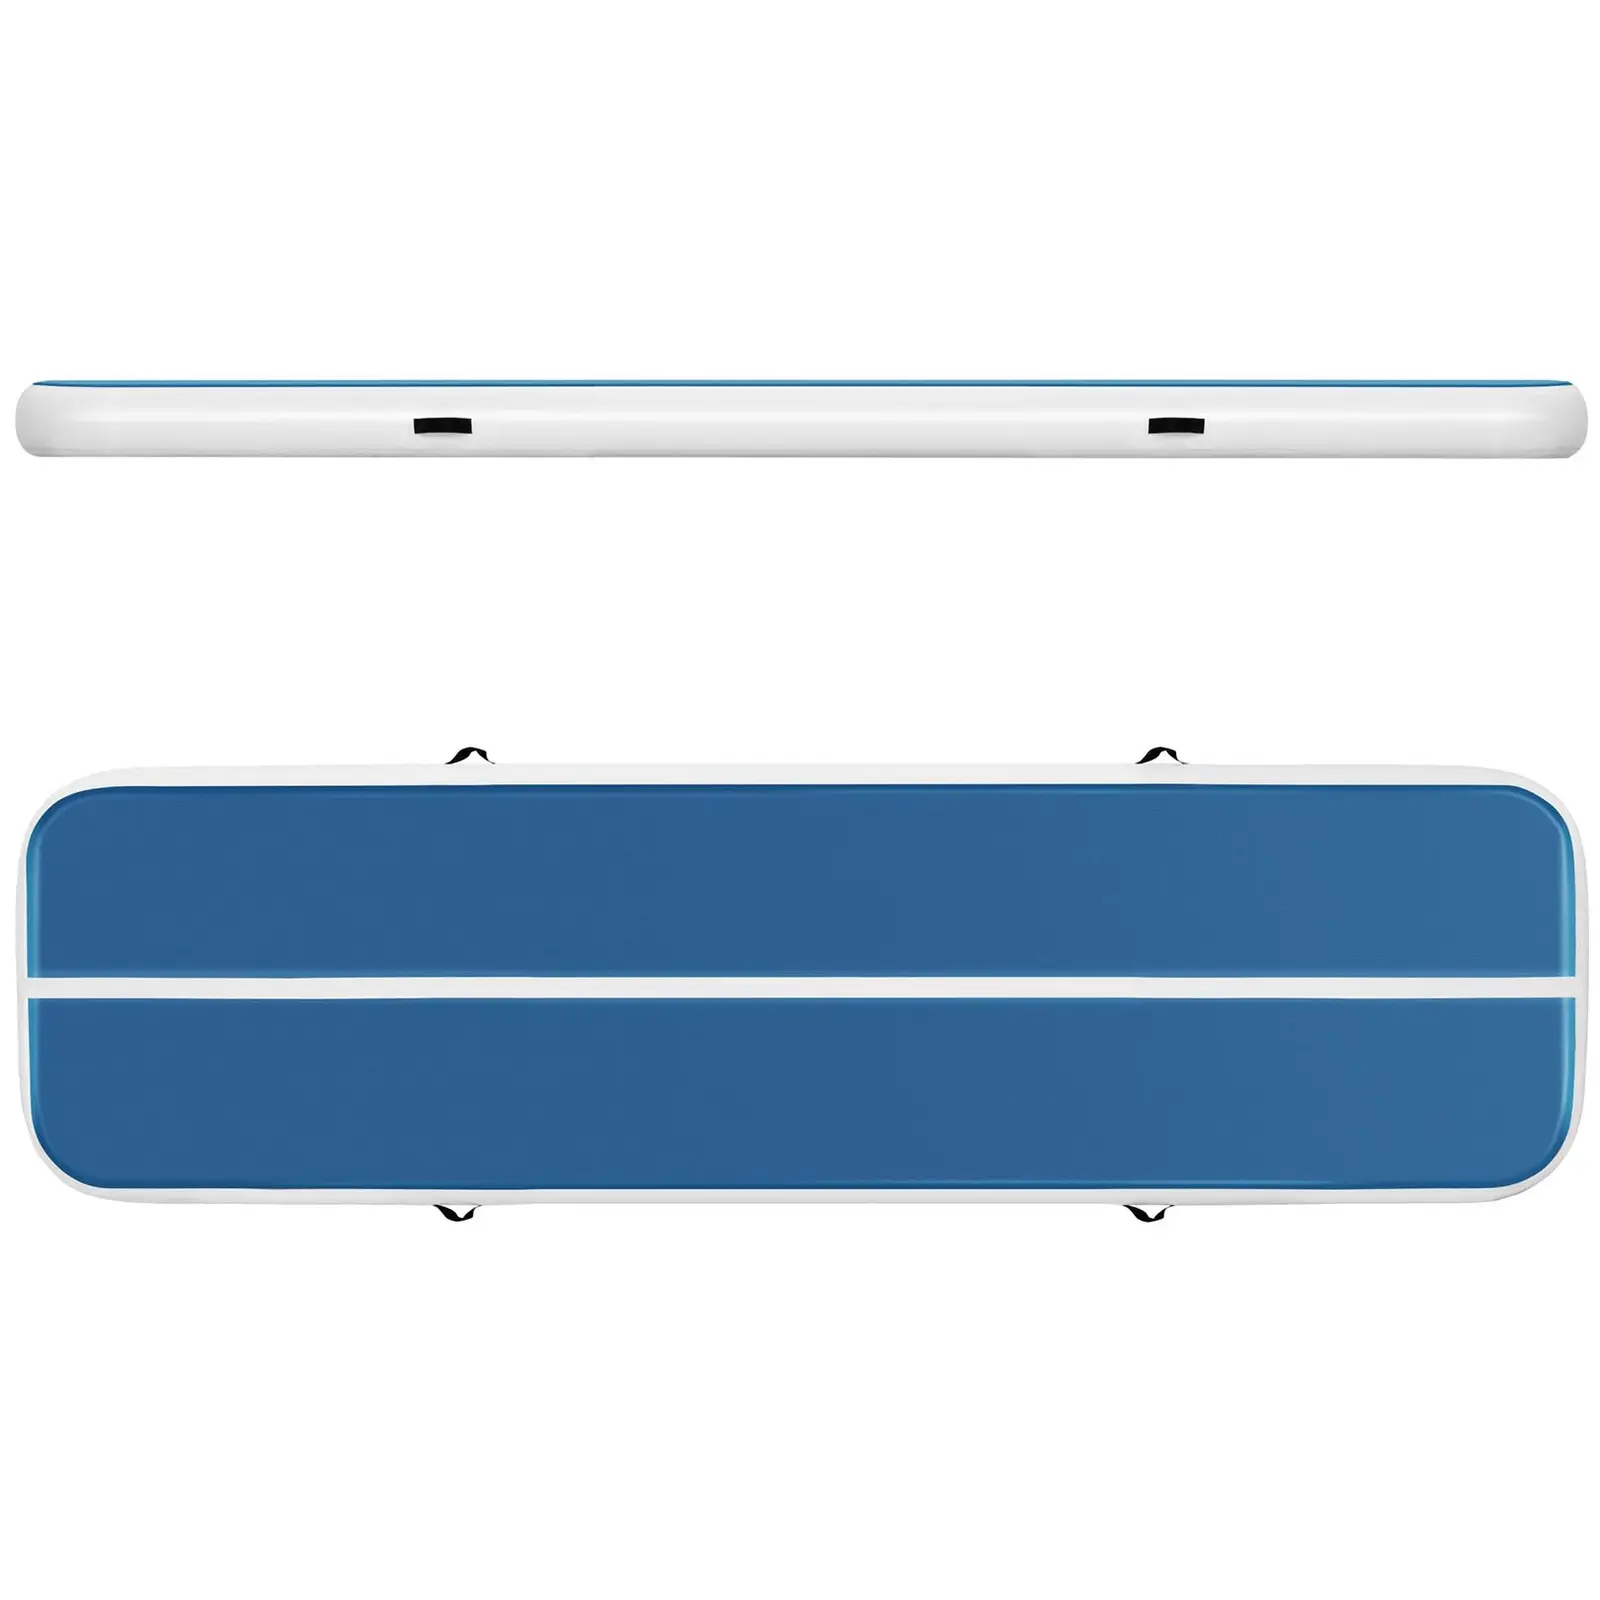 Air tumbling mat - 400 x 100 x 20 cm - 200 kg - Bleu/blanc